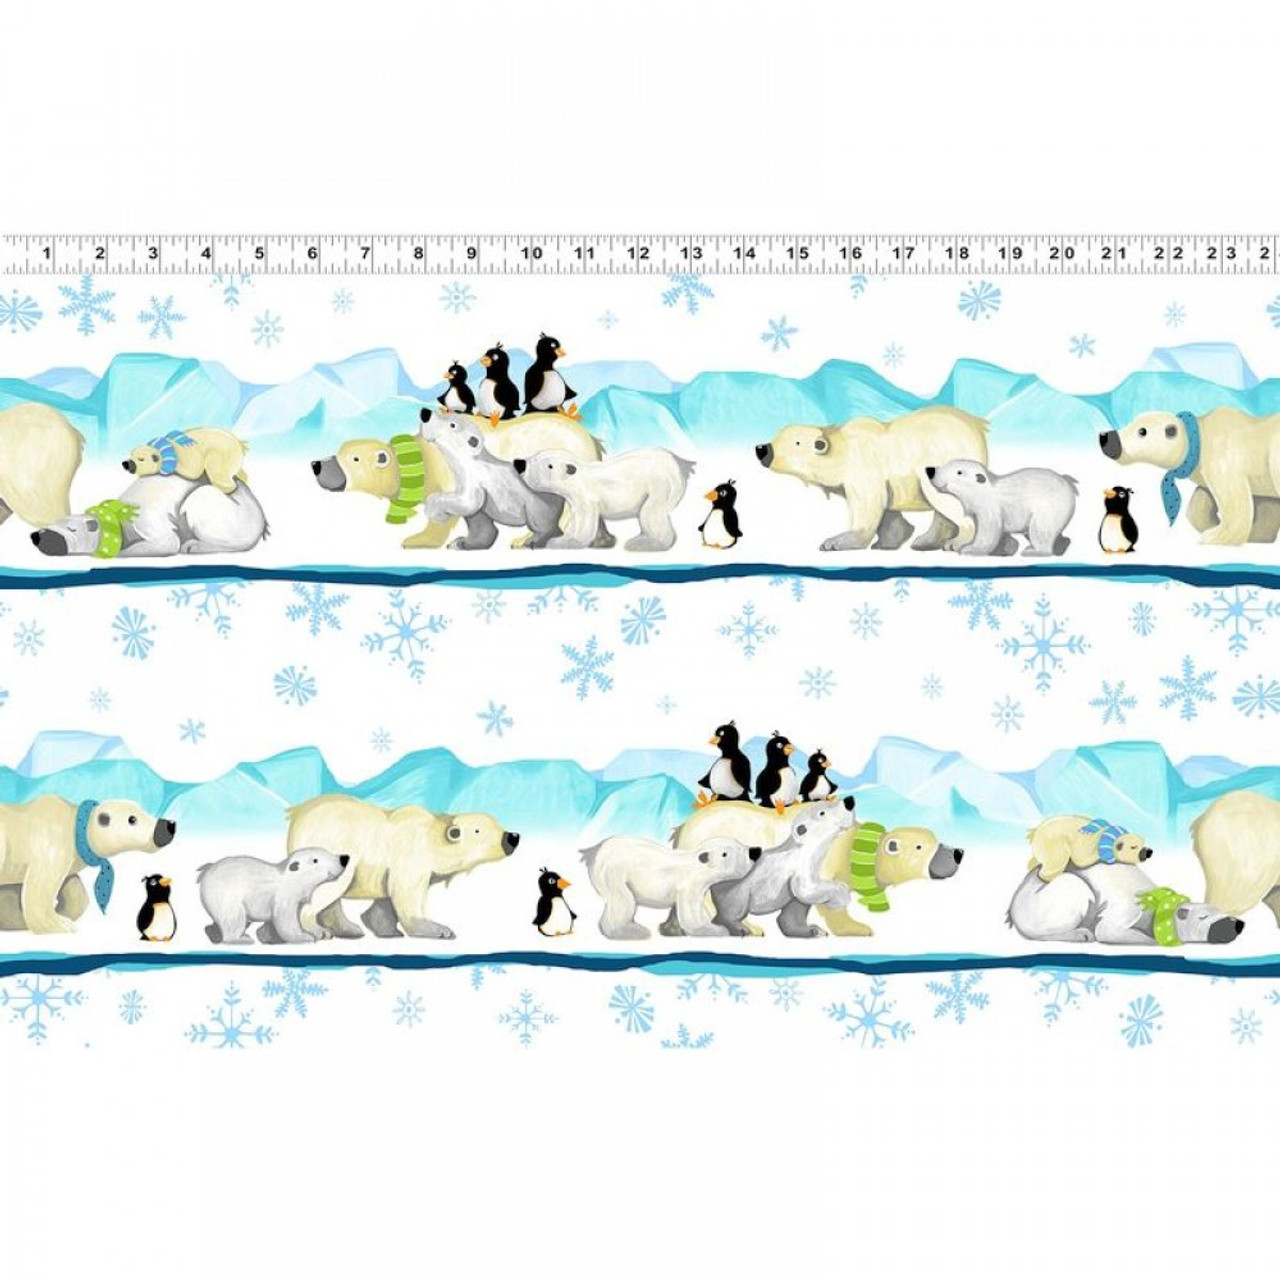 Burr the Polar Bear - coordinating fabrics - by SusyBee